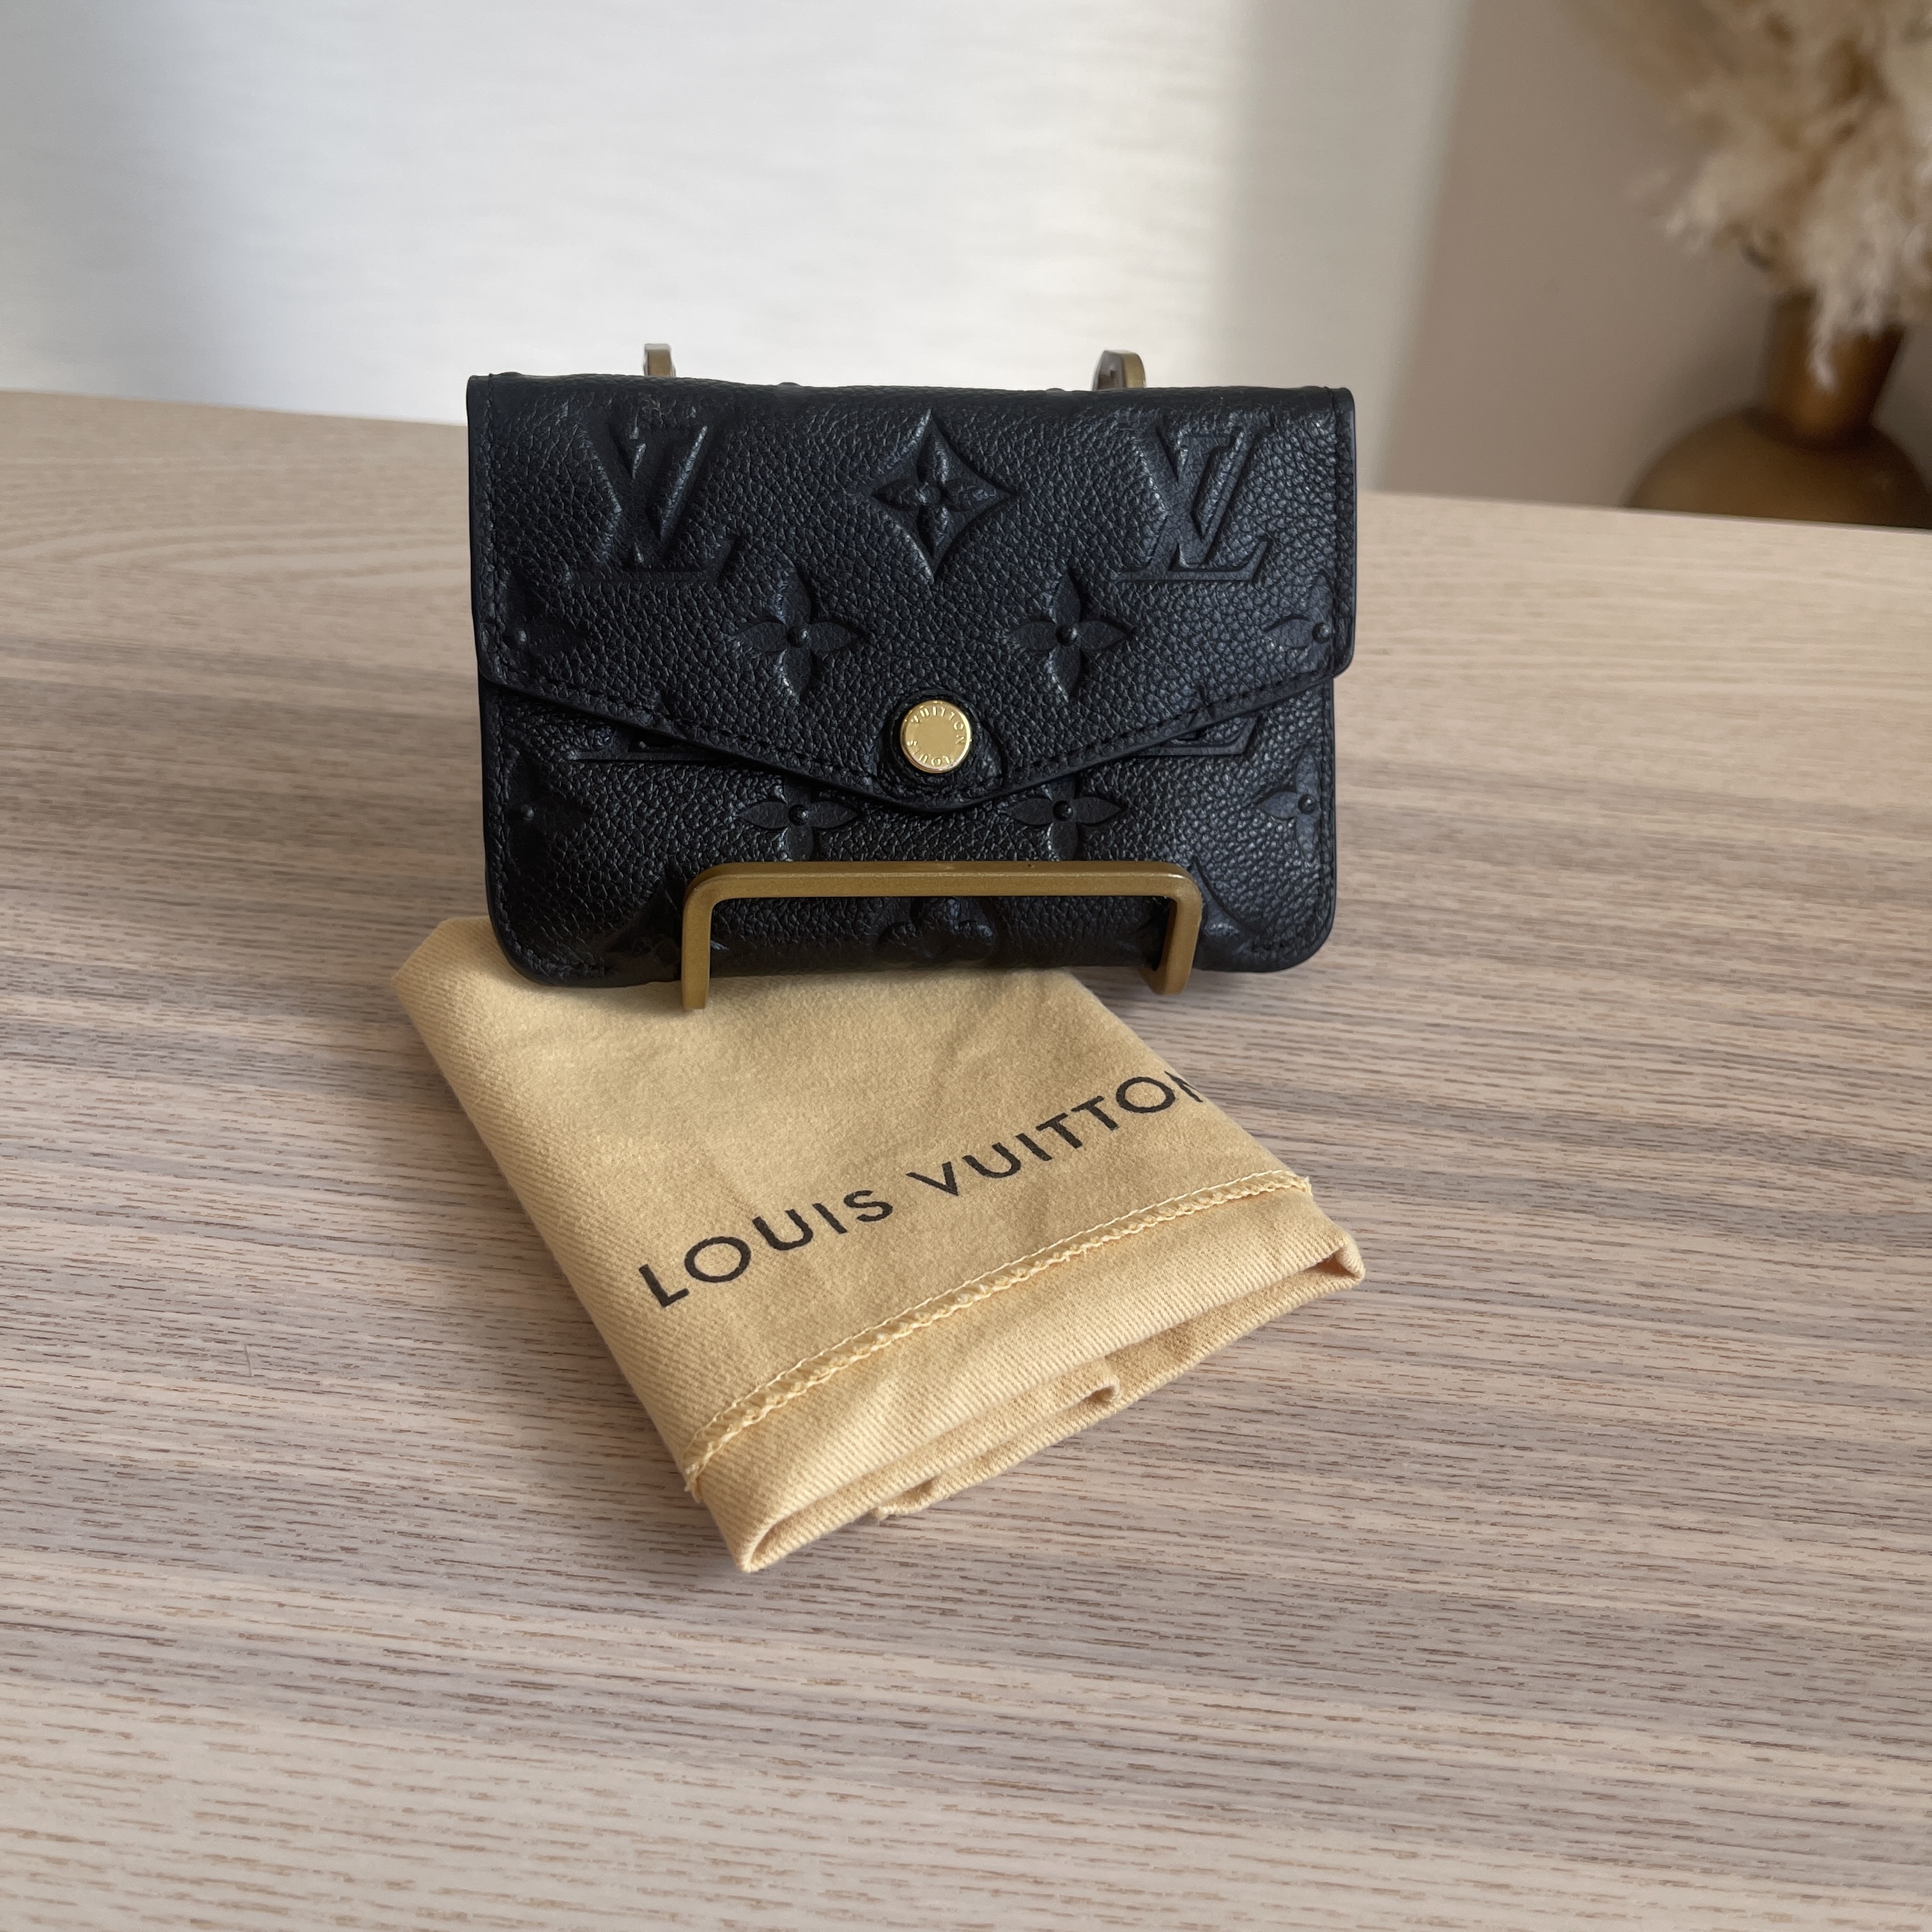 Louis Vuitton Key Pouch in Noir Empreinte - SOLD